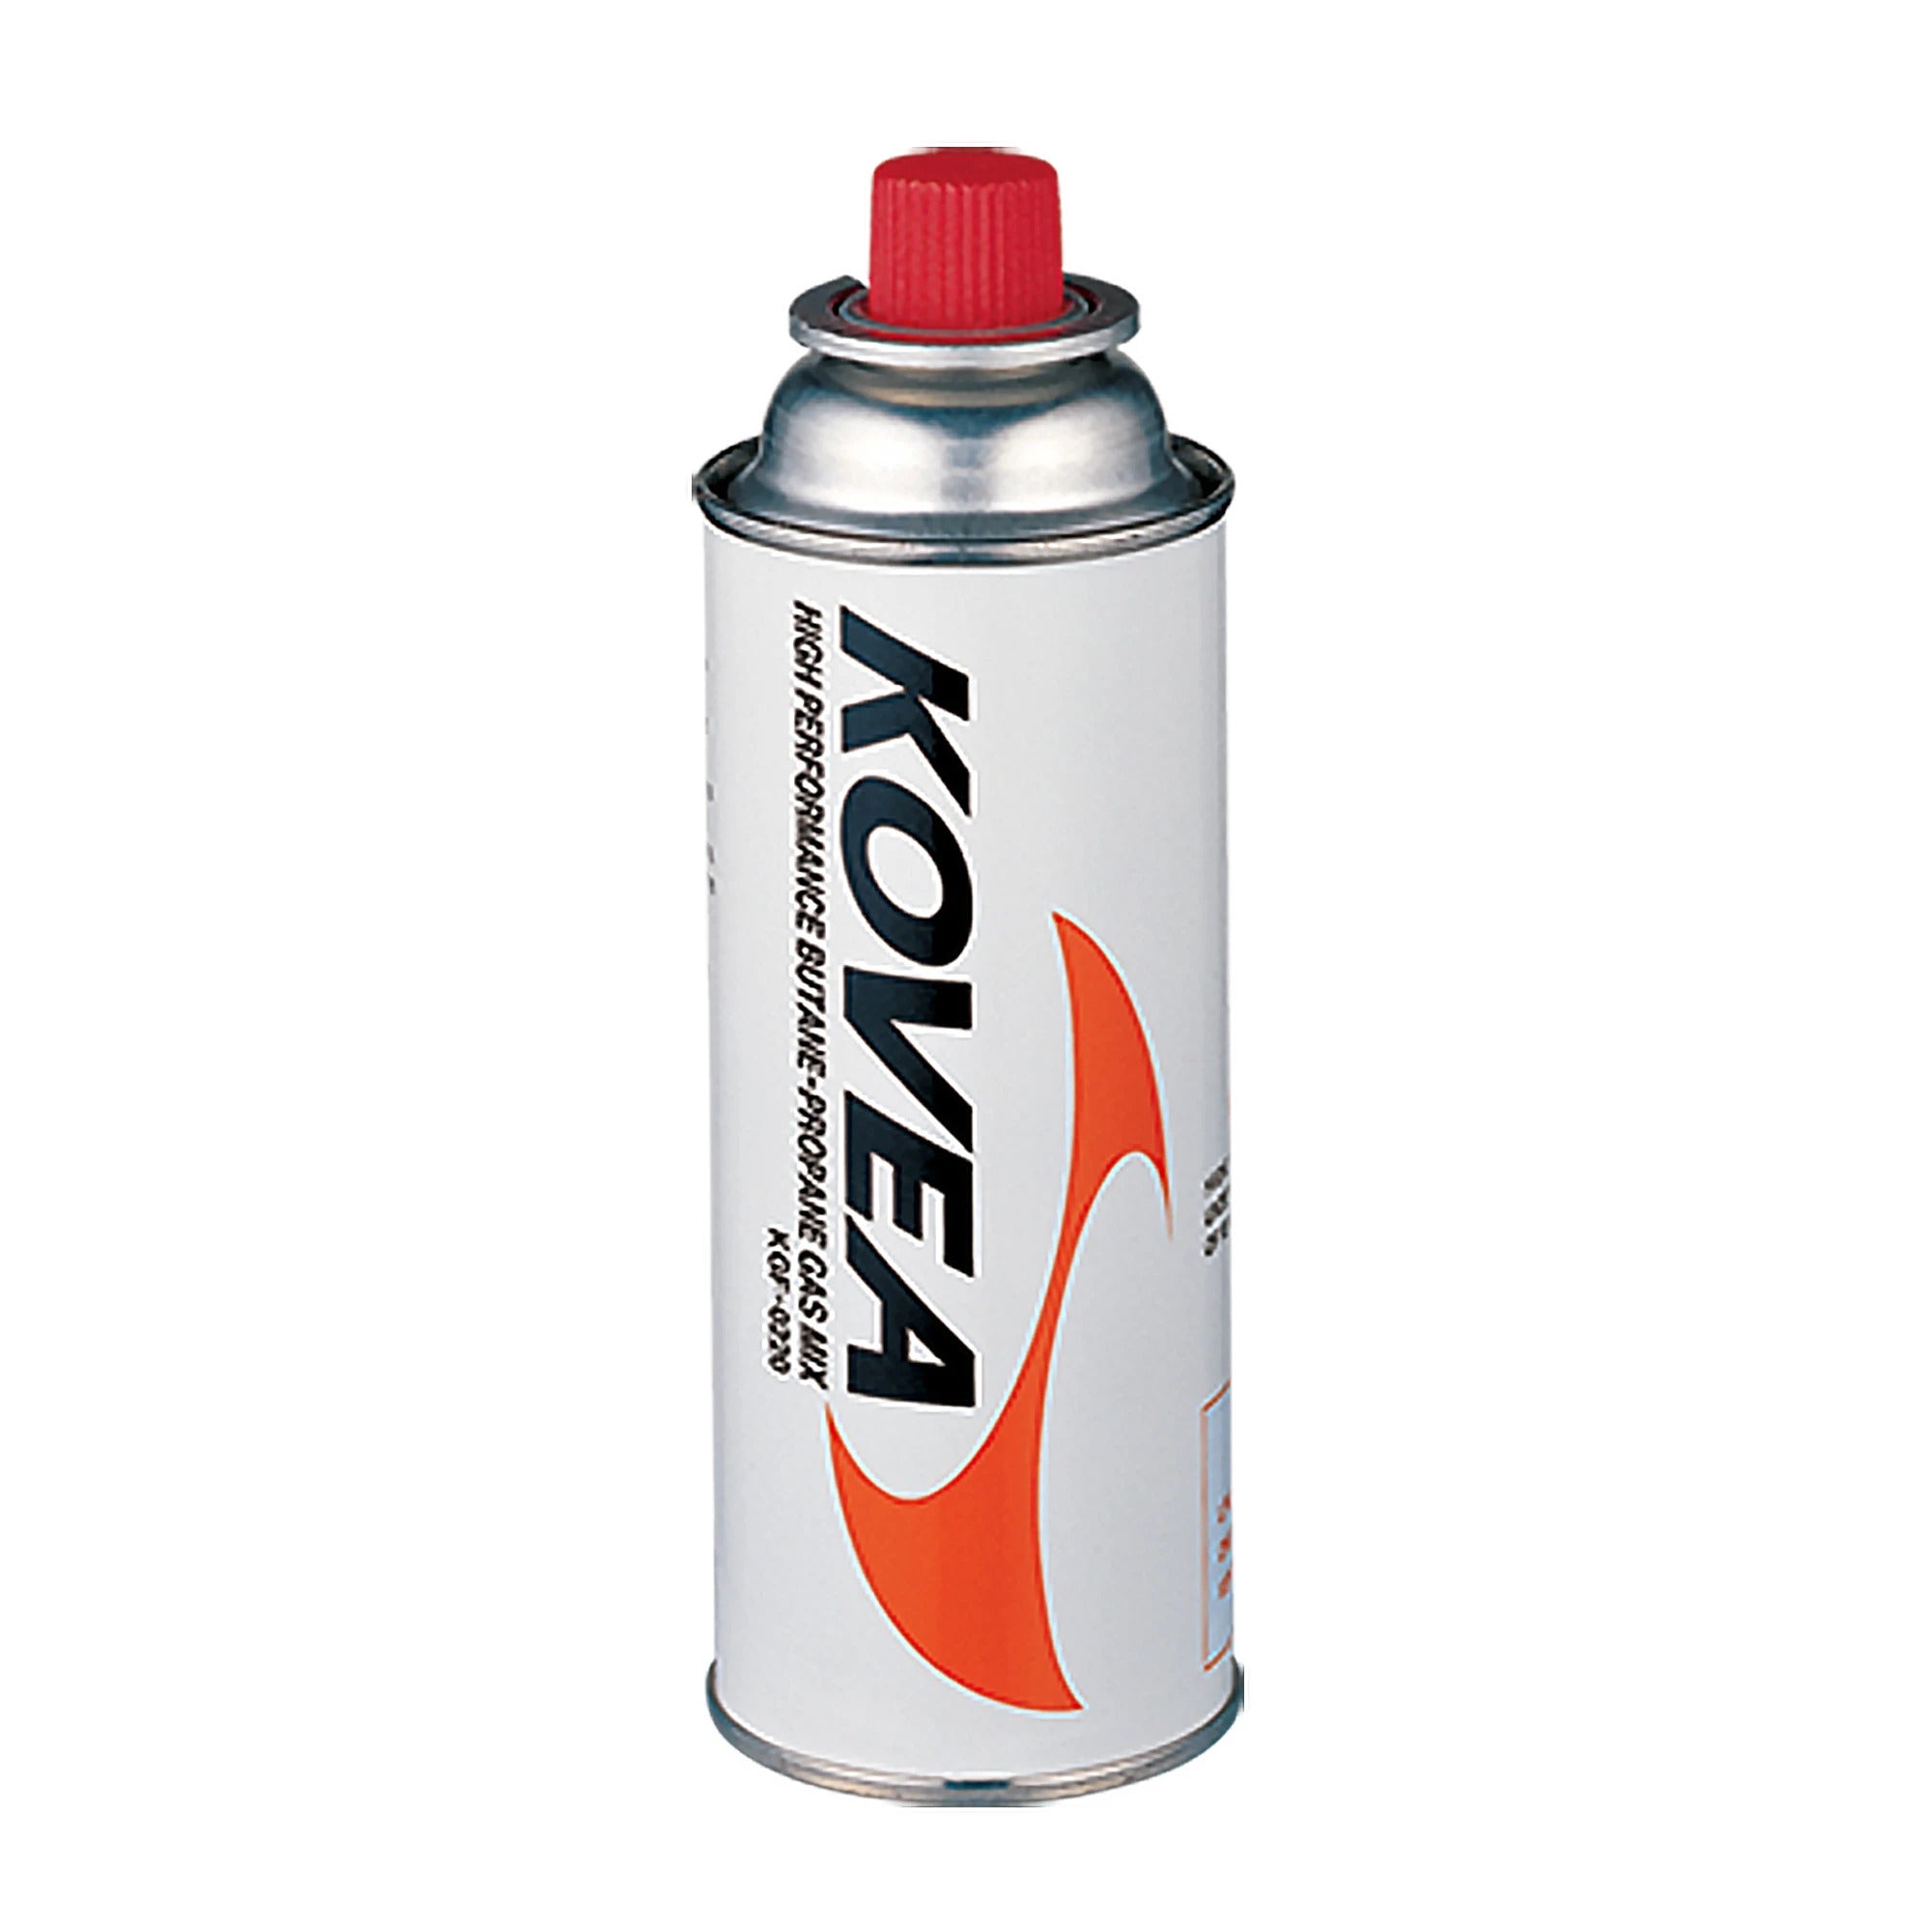 Kovea 227g Nozzle Style Butane Gas Canister - Bulk Pack of 28